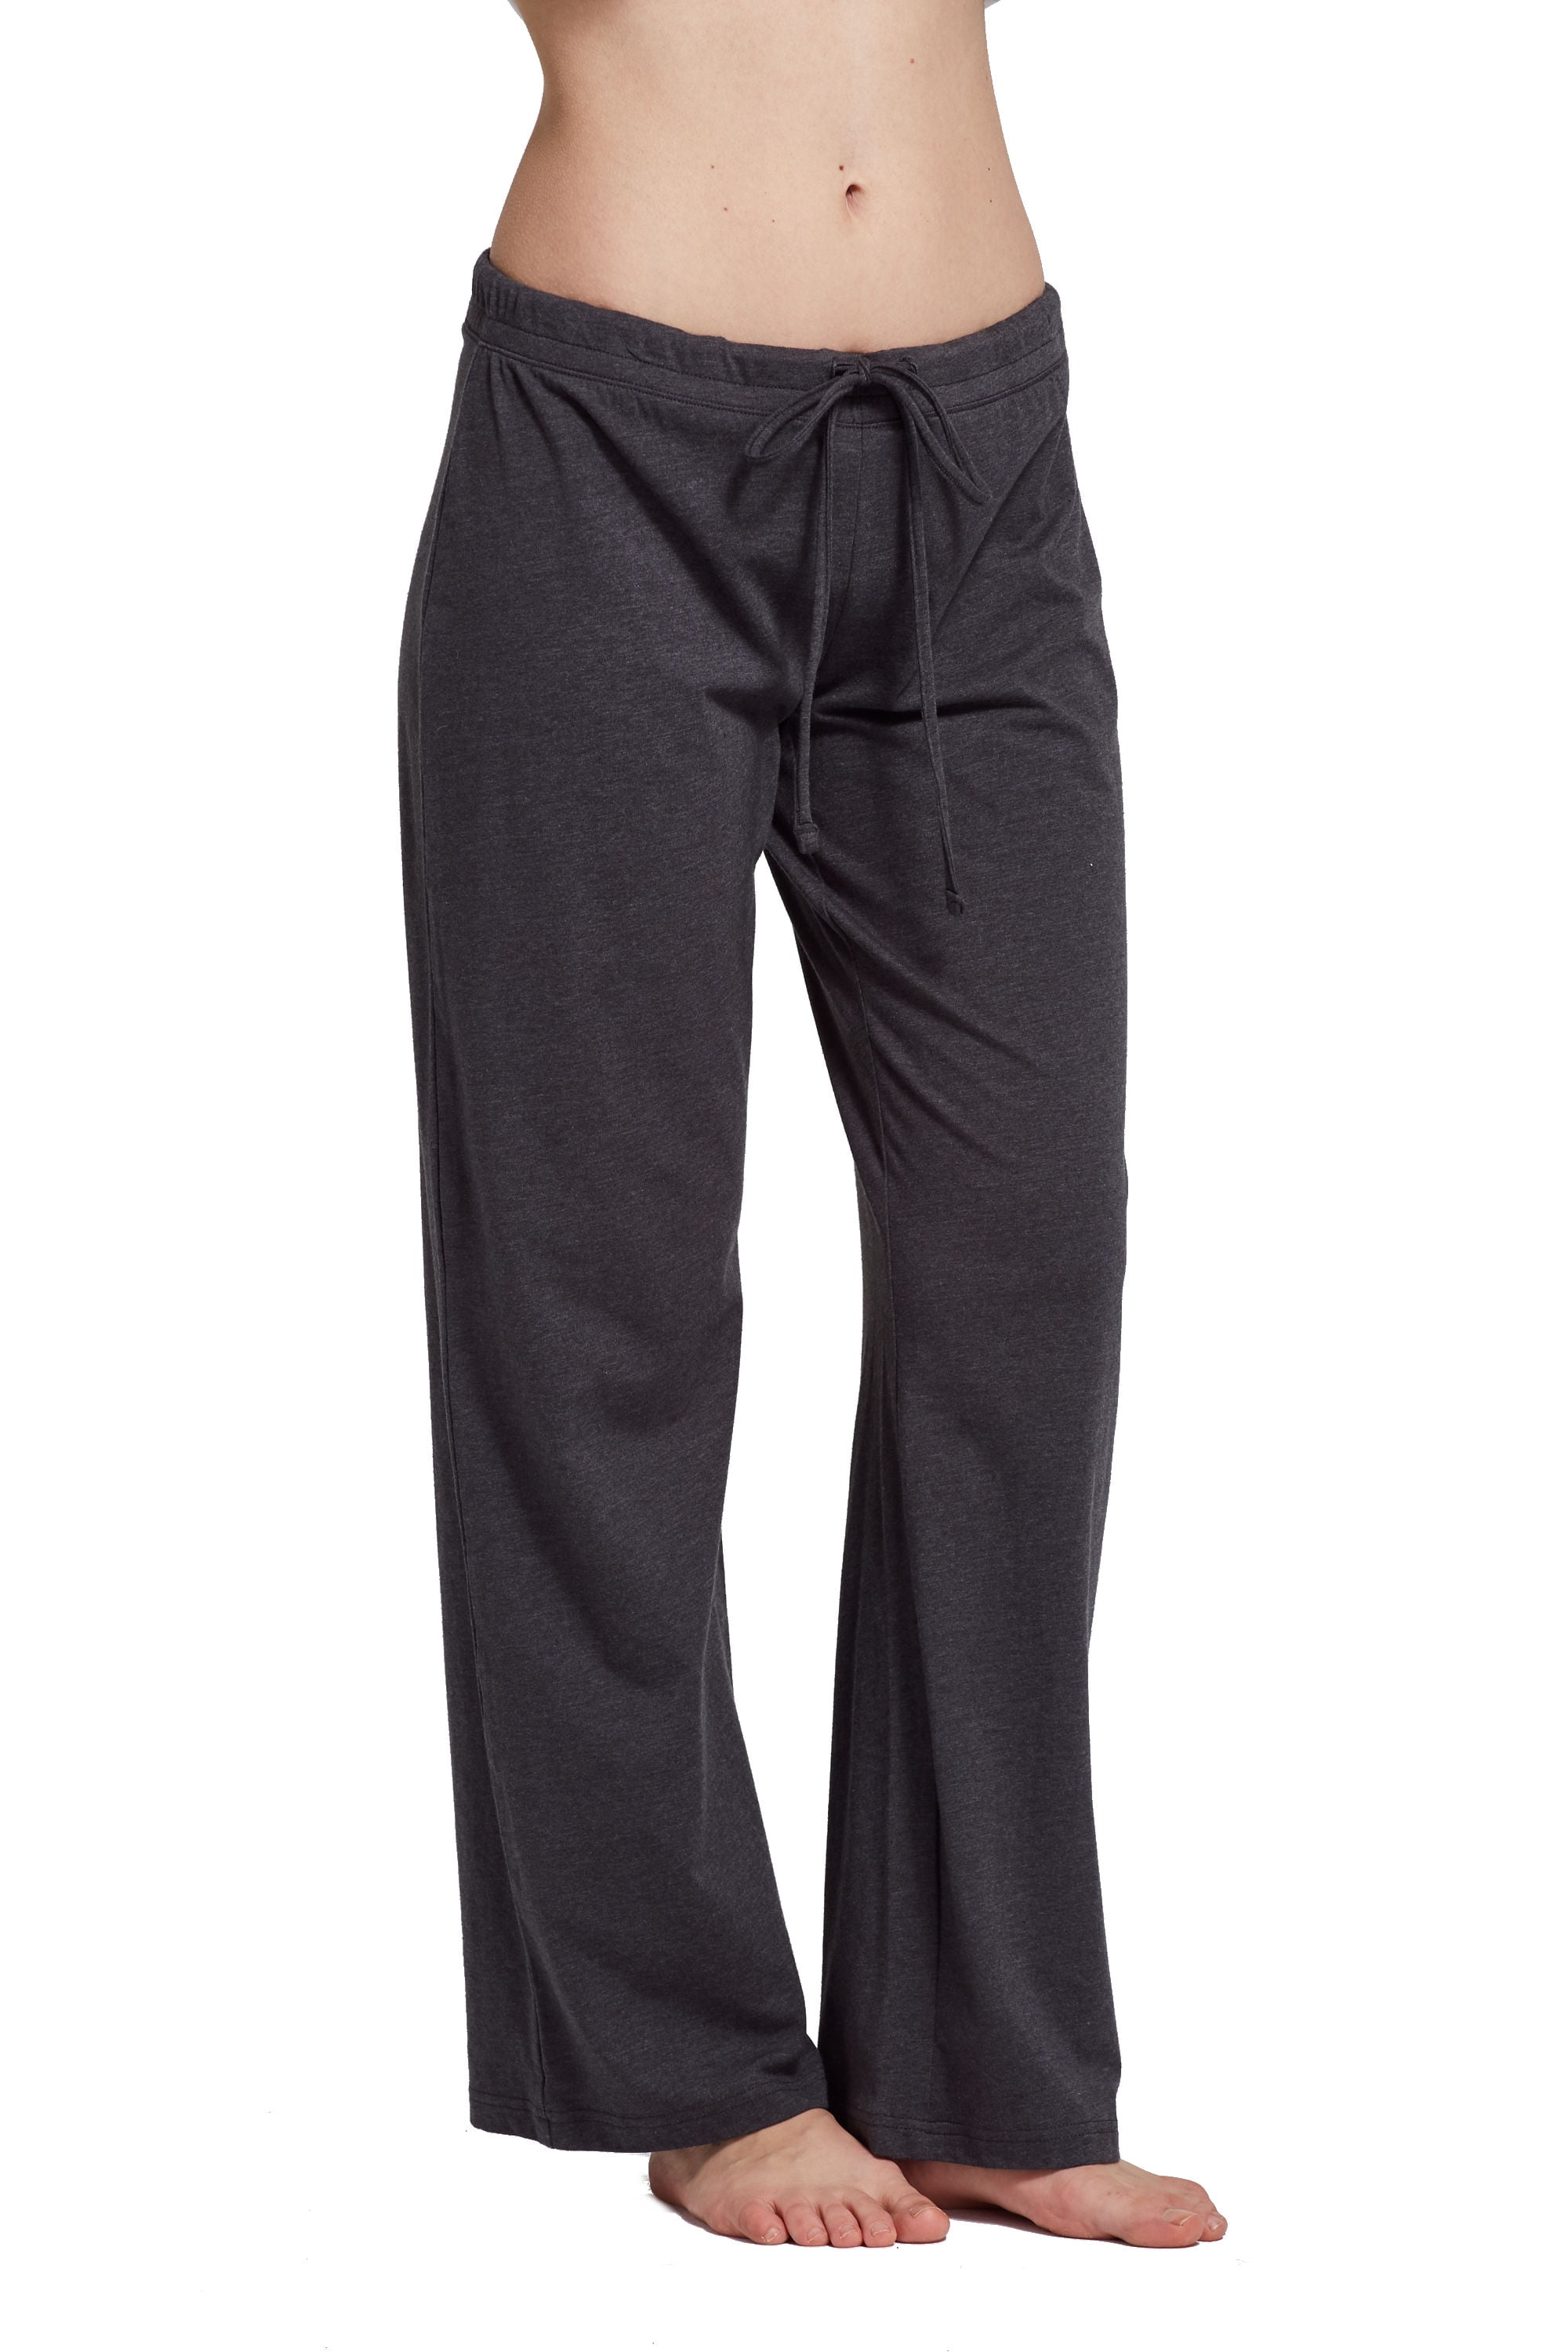 CYZ Women's Casual Stretch Cotton Pajama Pants Simple Lounge Pants ...